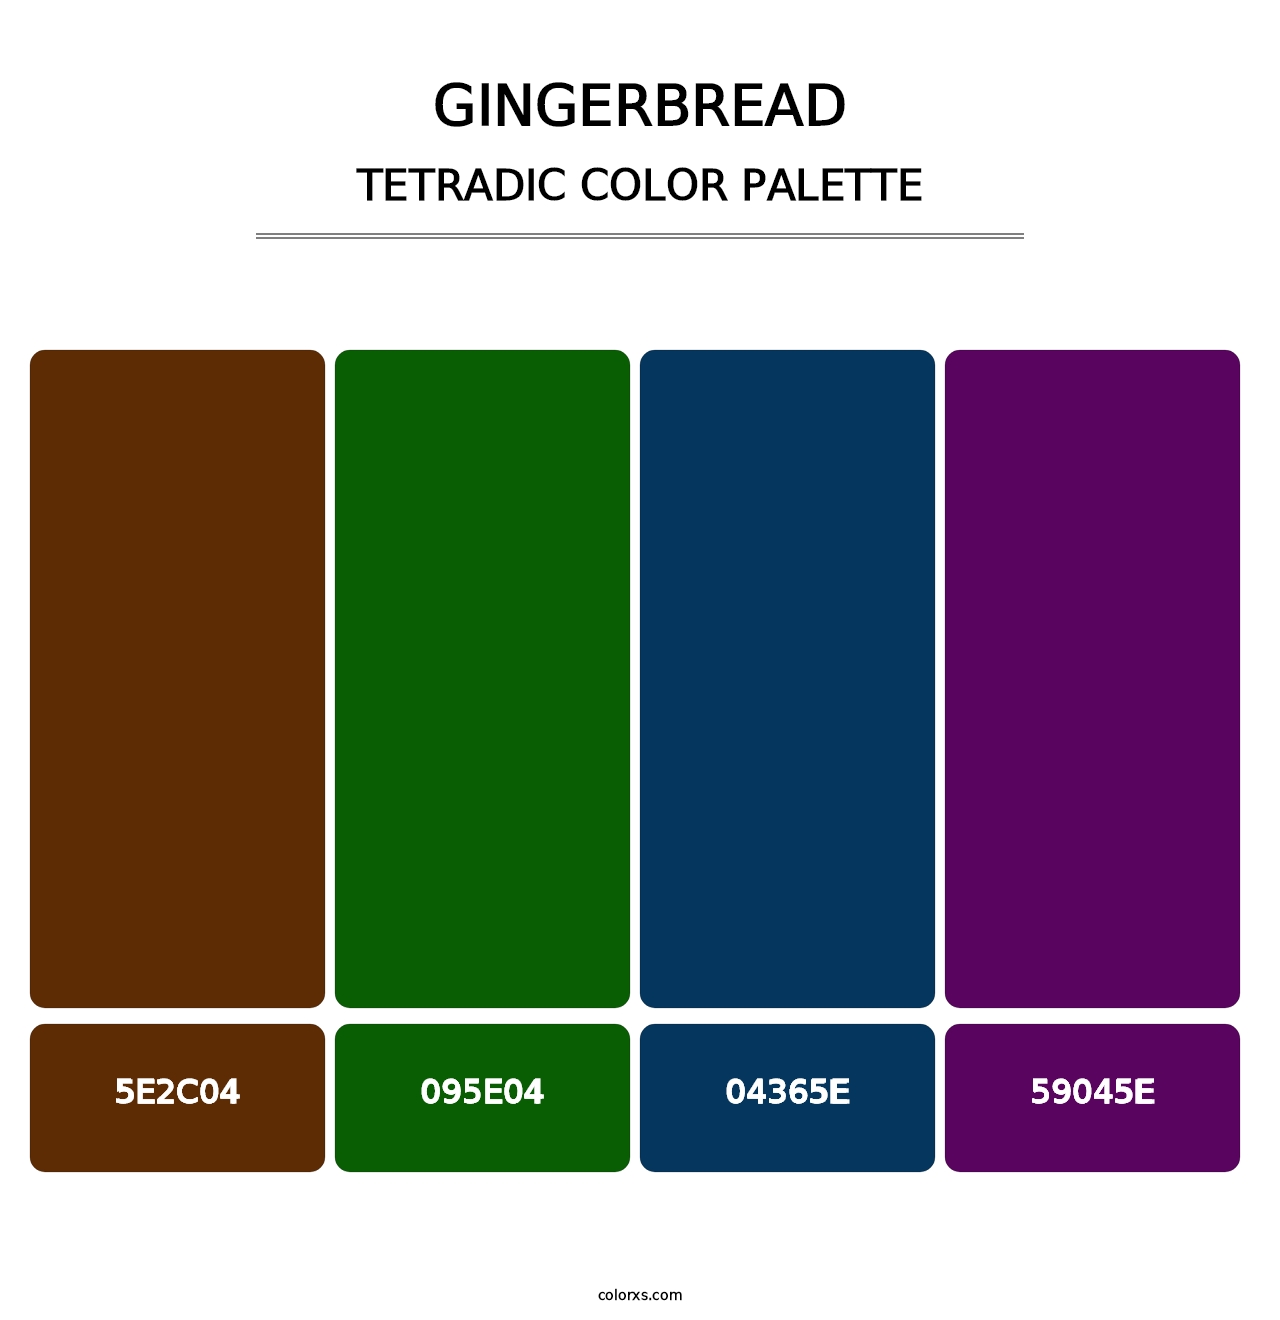 Gingerbread - Tetradic Color Palette